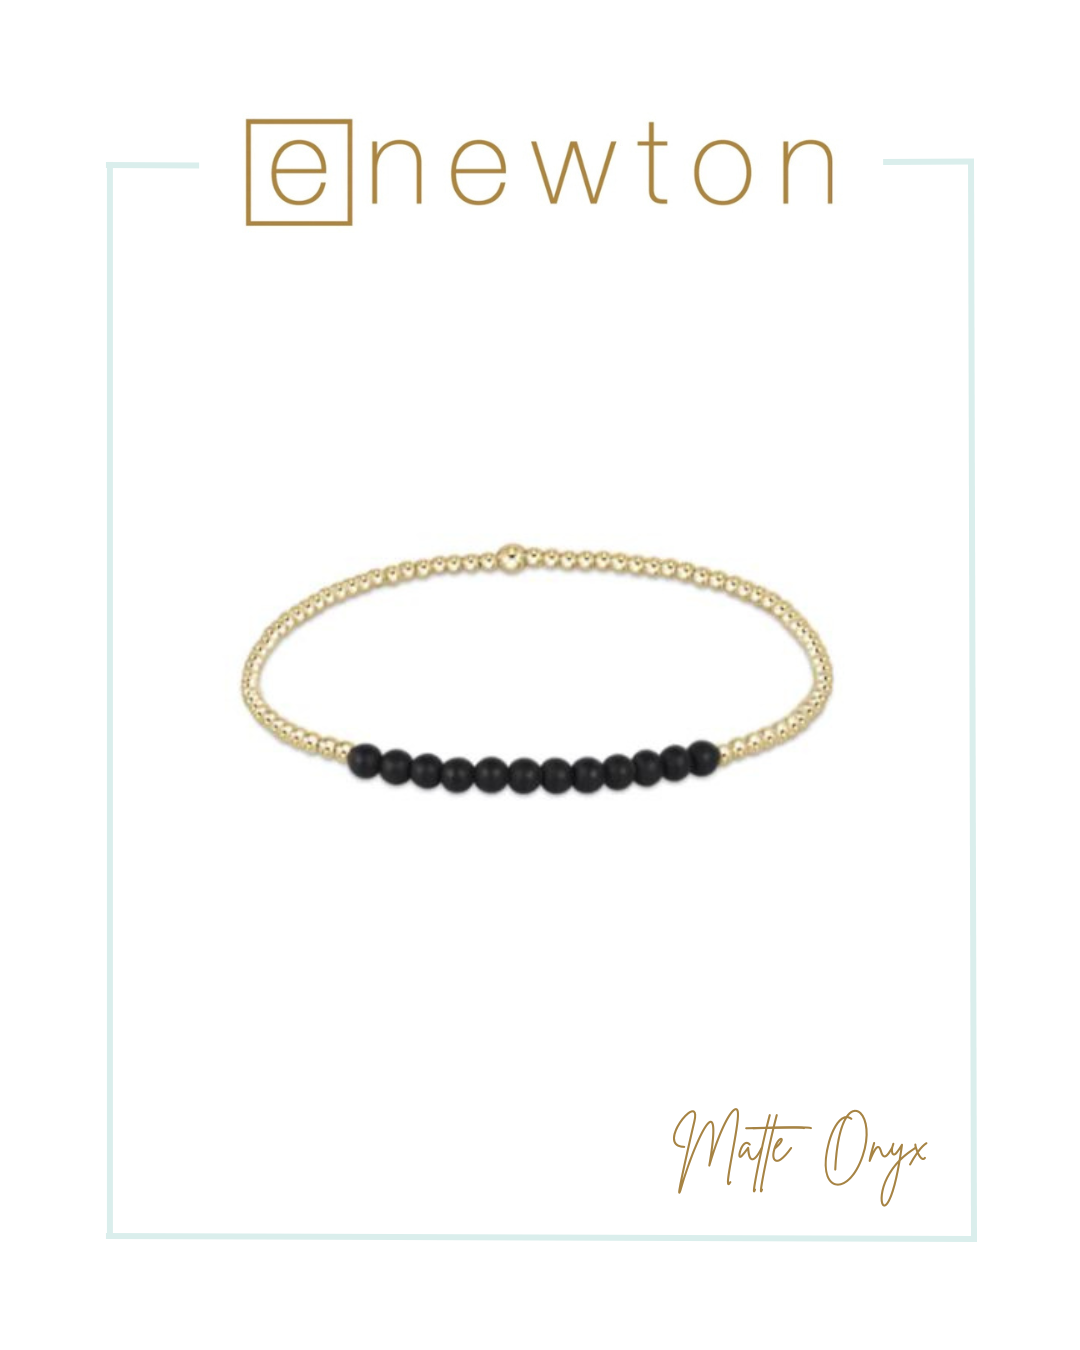 E Newton Gold Bliss 2mm Bead Bracelet - Matte Onyx-Bracelets-ENEWTON-The Village Shoppe, Women’s Fashion Boutique, Shop Online and In Store - Located in Muscle Shoals, AL.